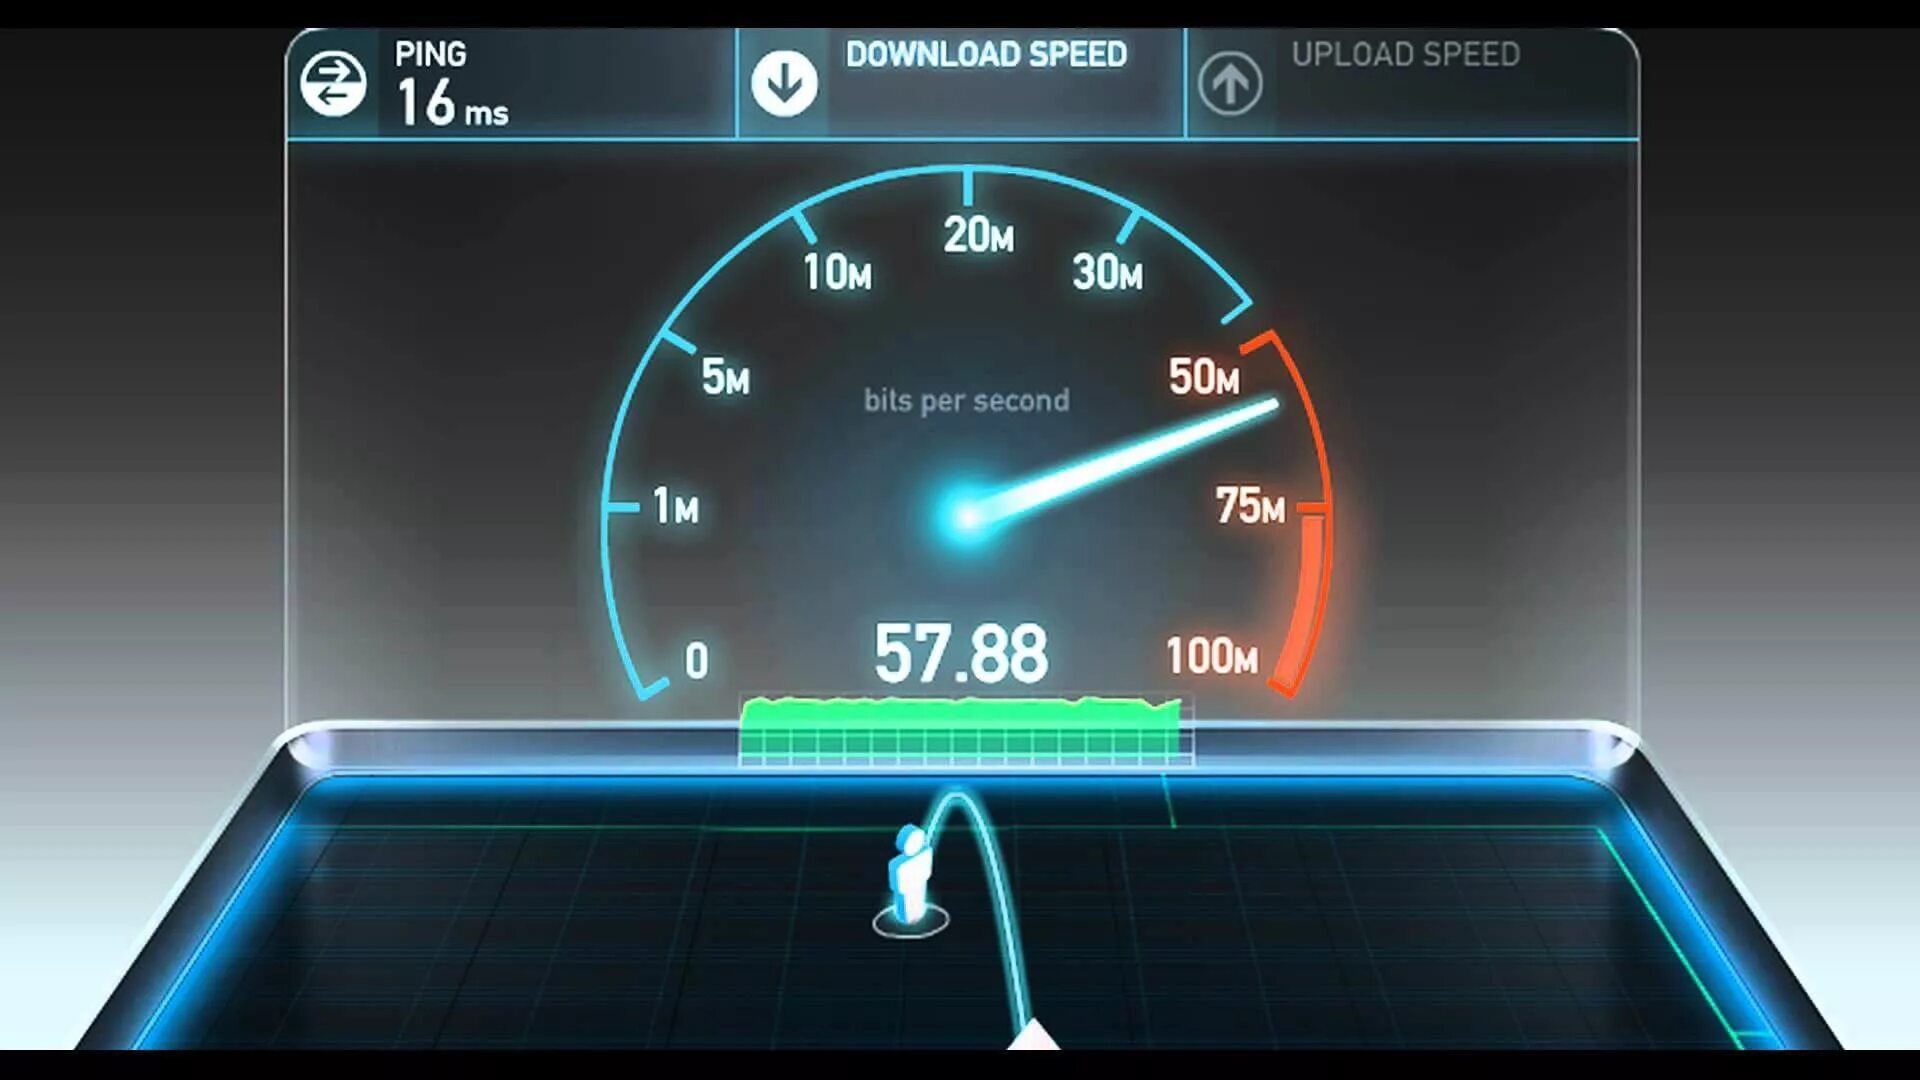 Connection speed. Быстрый интернет. Тест скорости интернета. Спидтест скорости интернета Ростелеком.